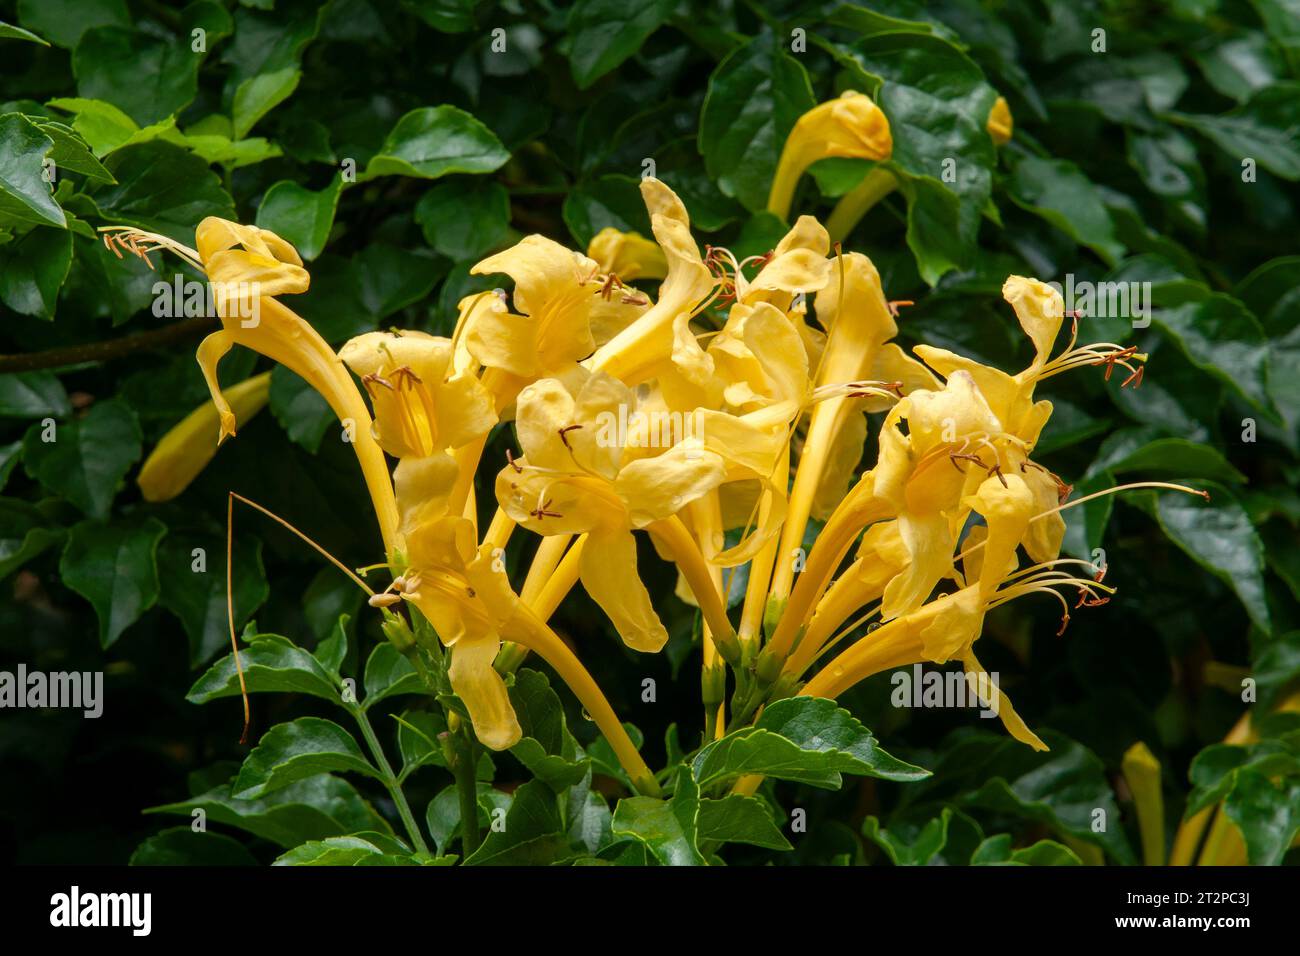 Sydney Australia, flowers of a cape honeysuckle in garden Stock Photo